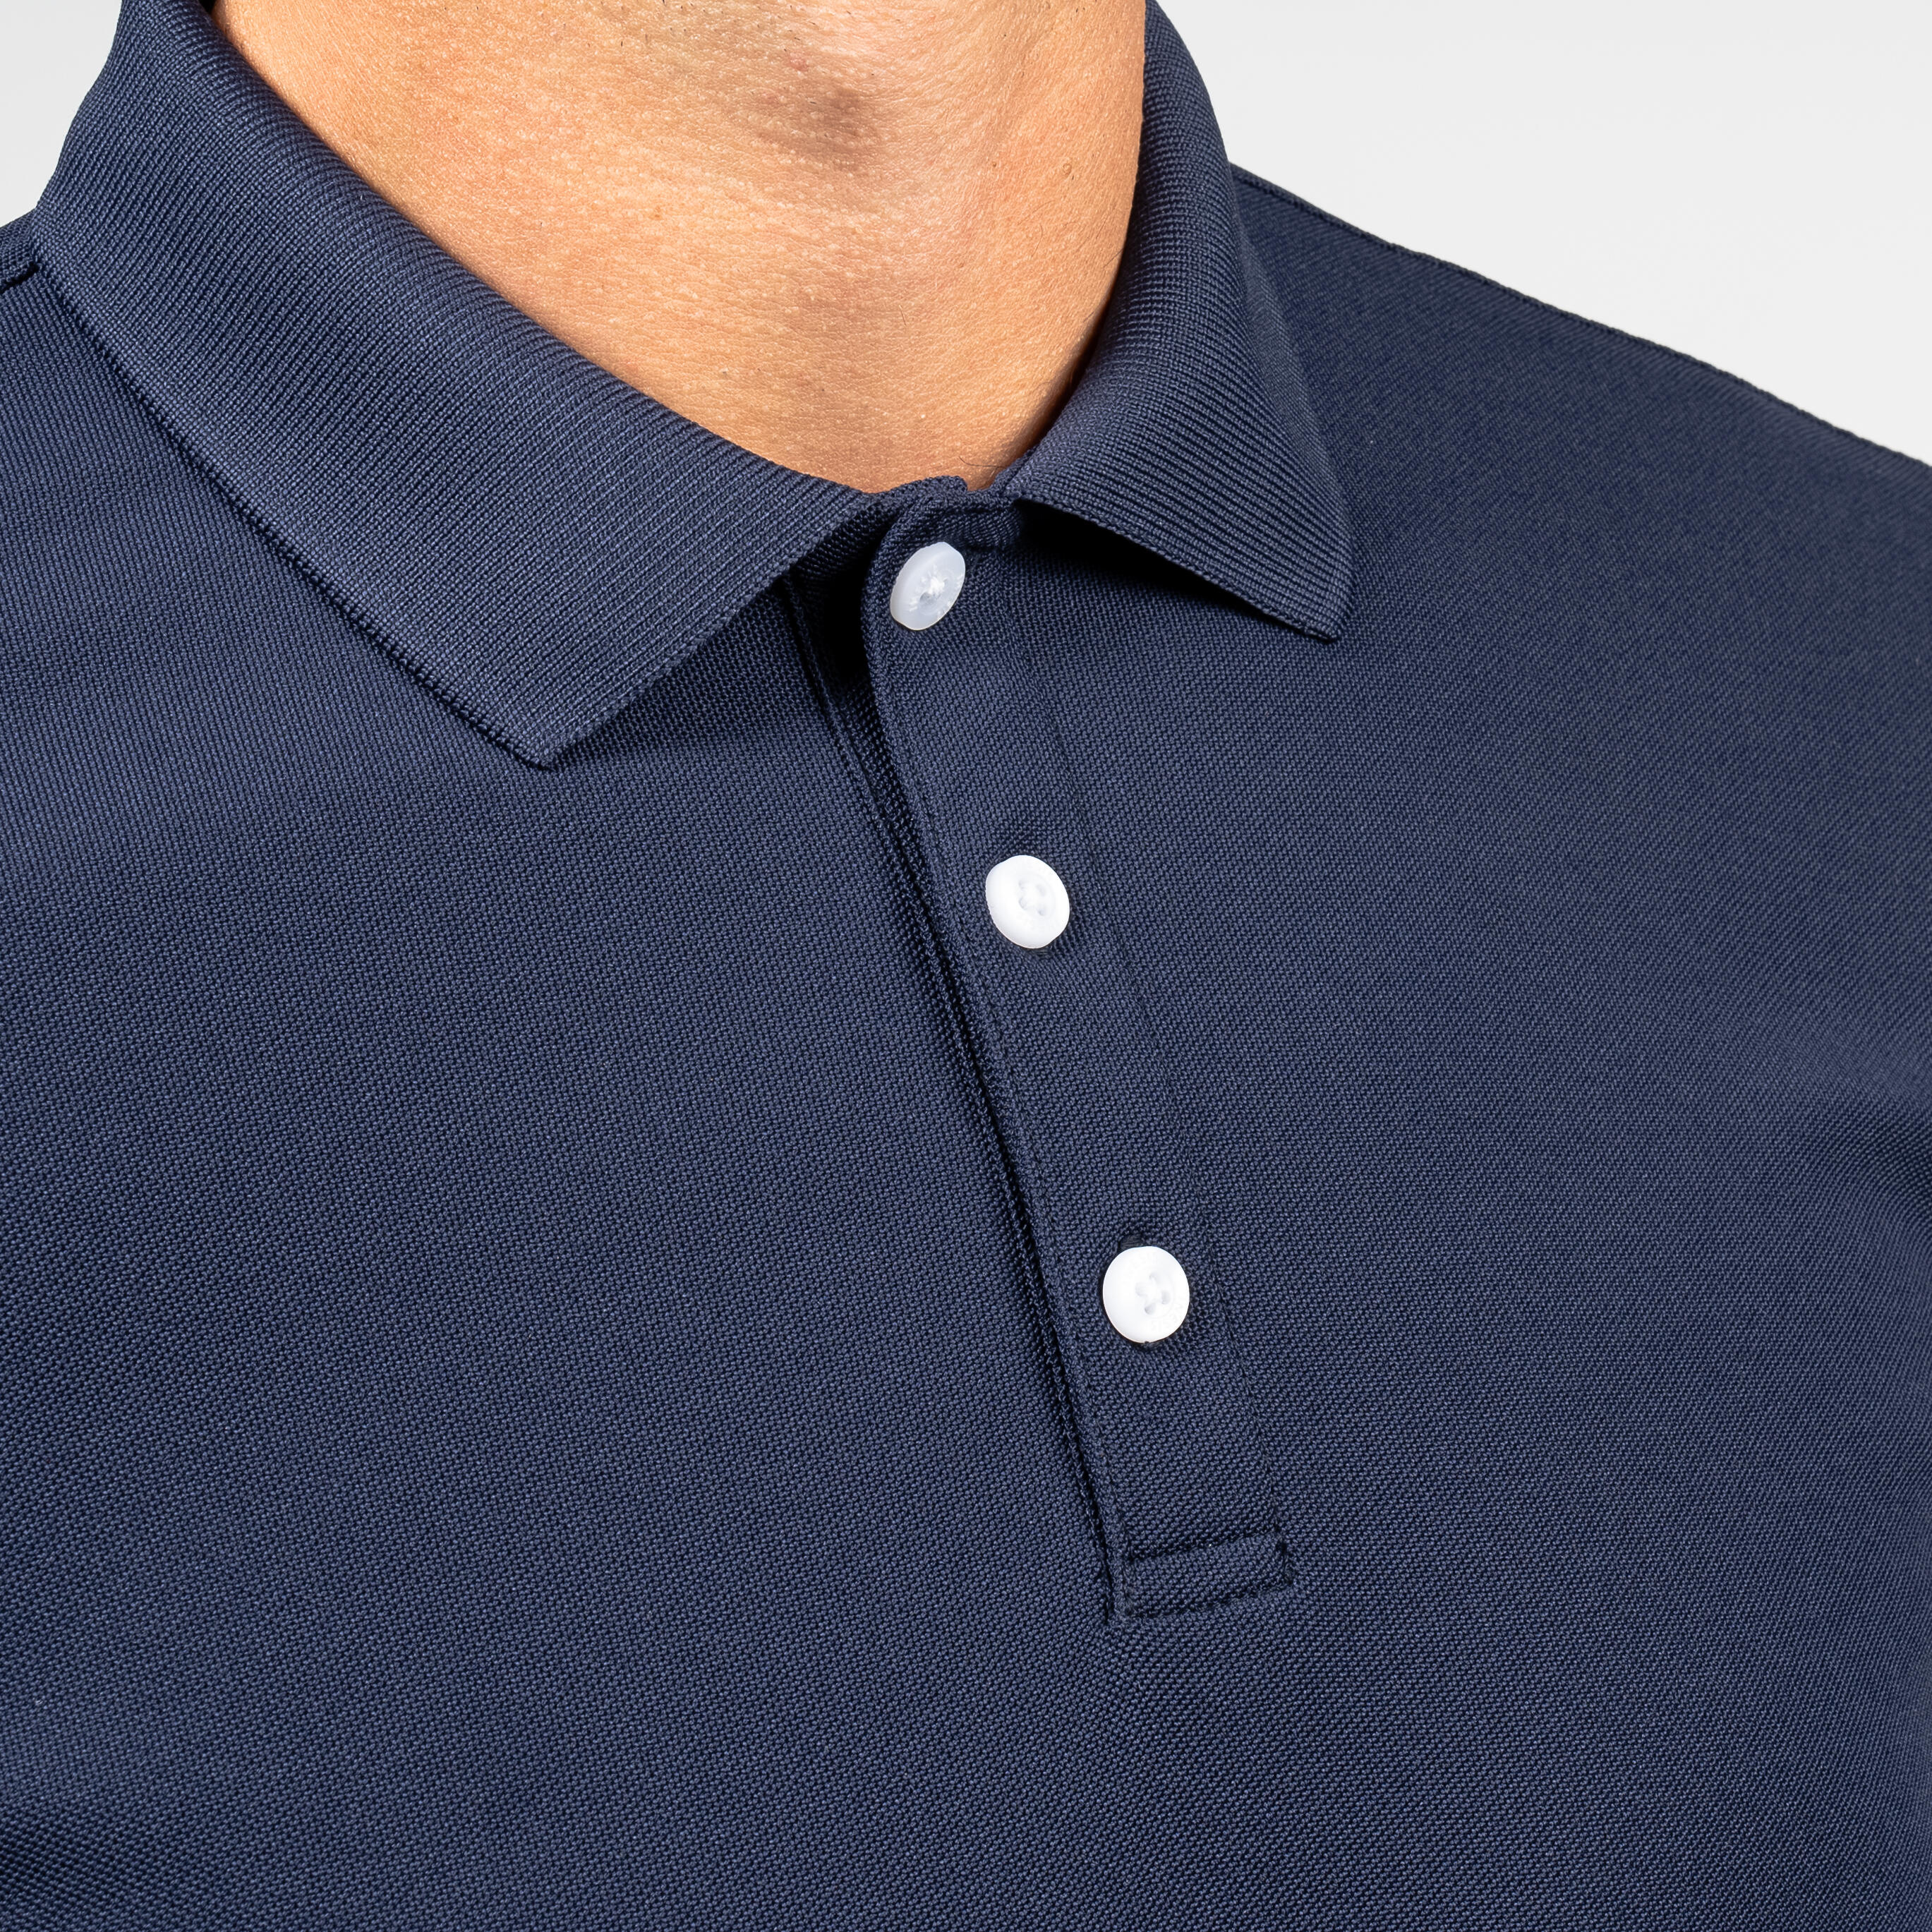 Men’s Golf Short-Sleeved Polo Shirt - WW 500 Navy - INESIS